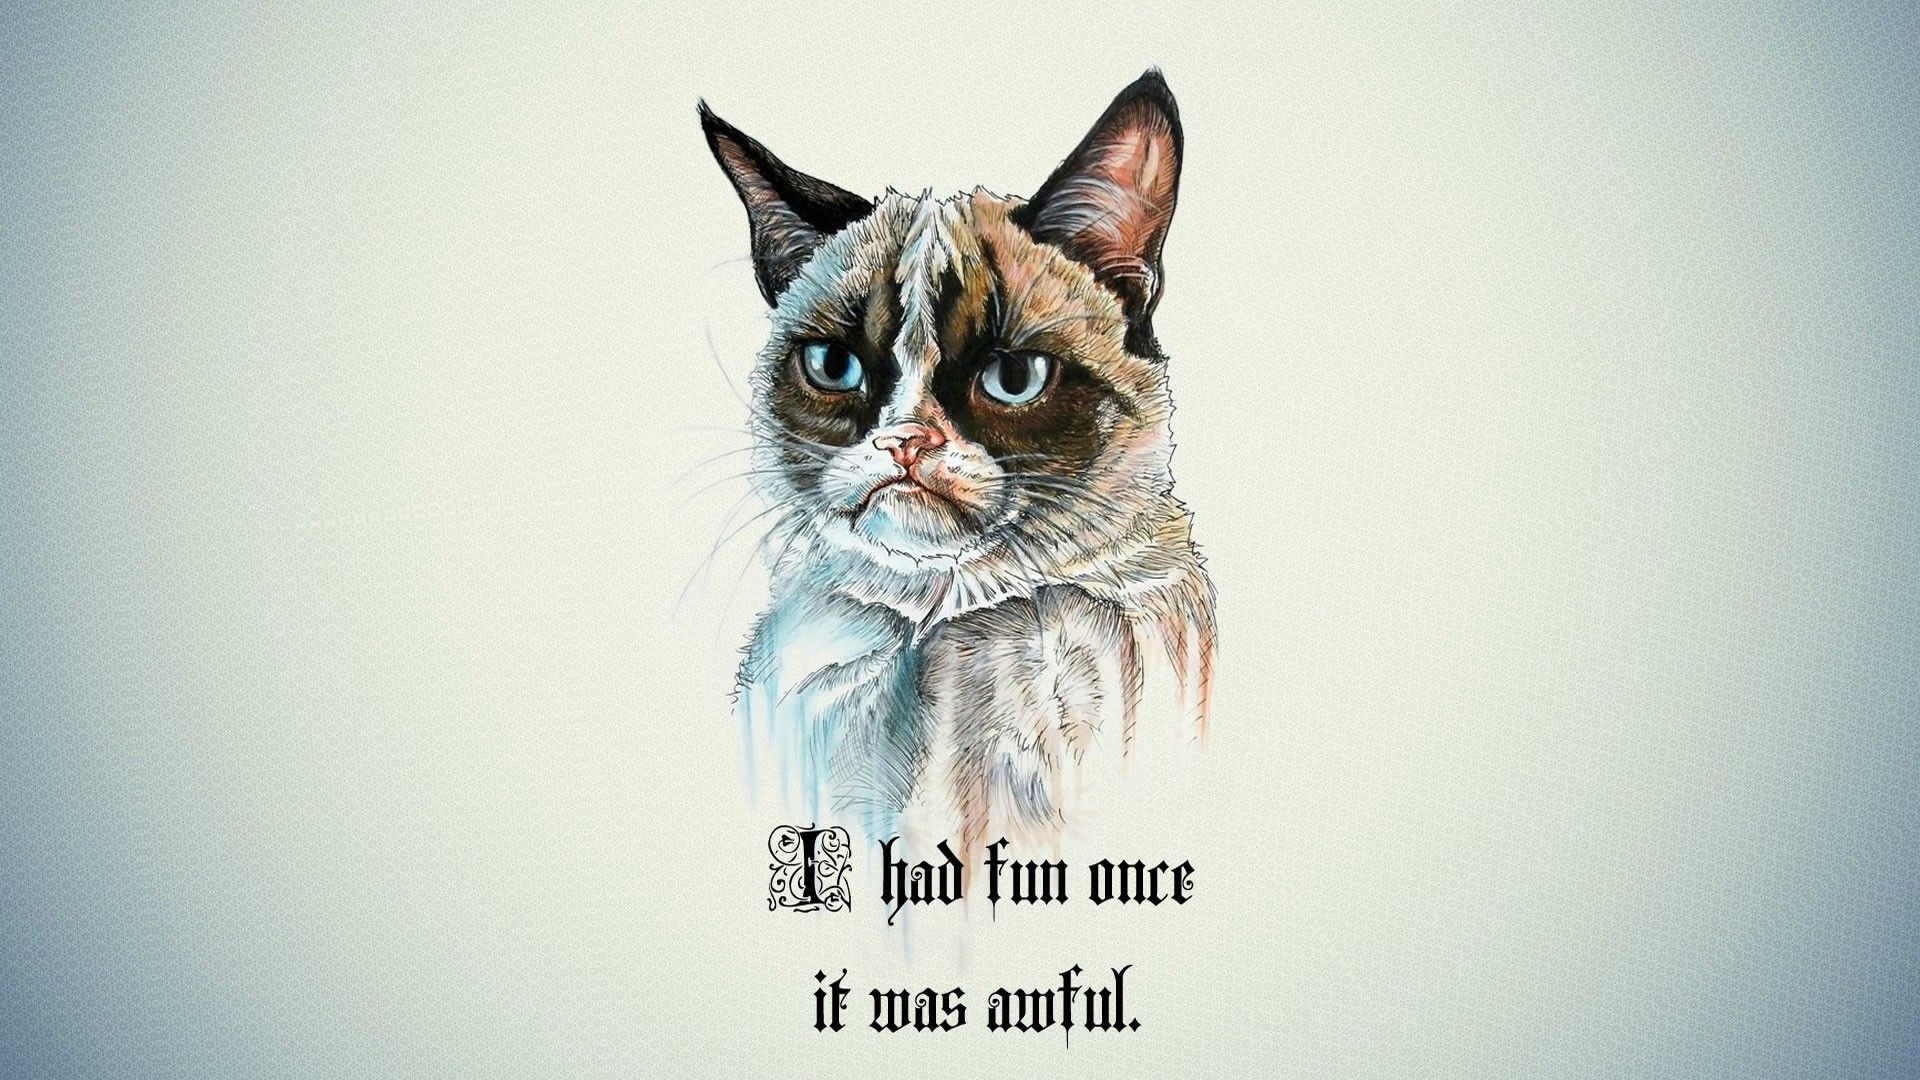 Sad Cat Meme Wallpapers - Wallpaper Cave